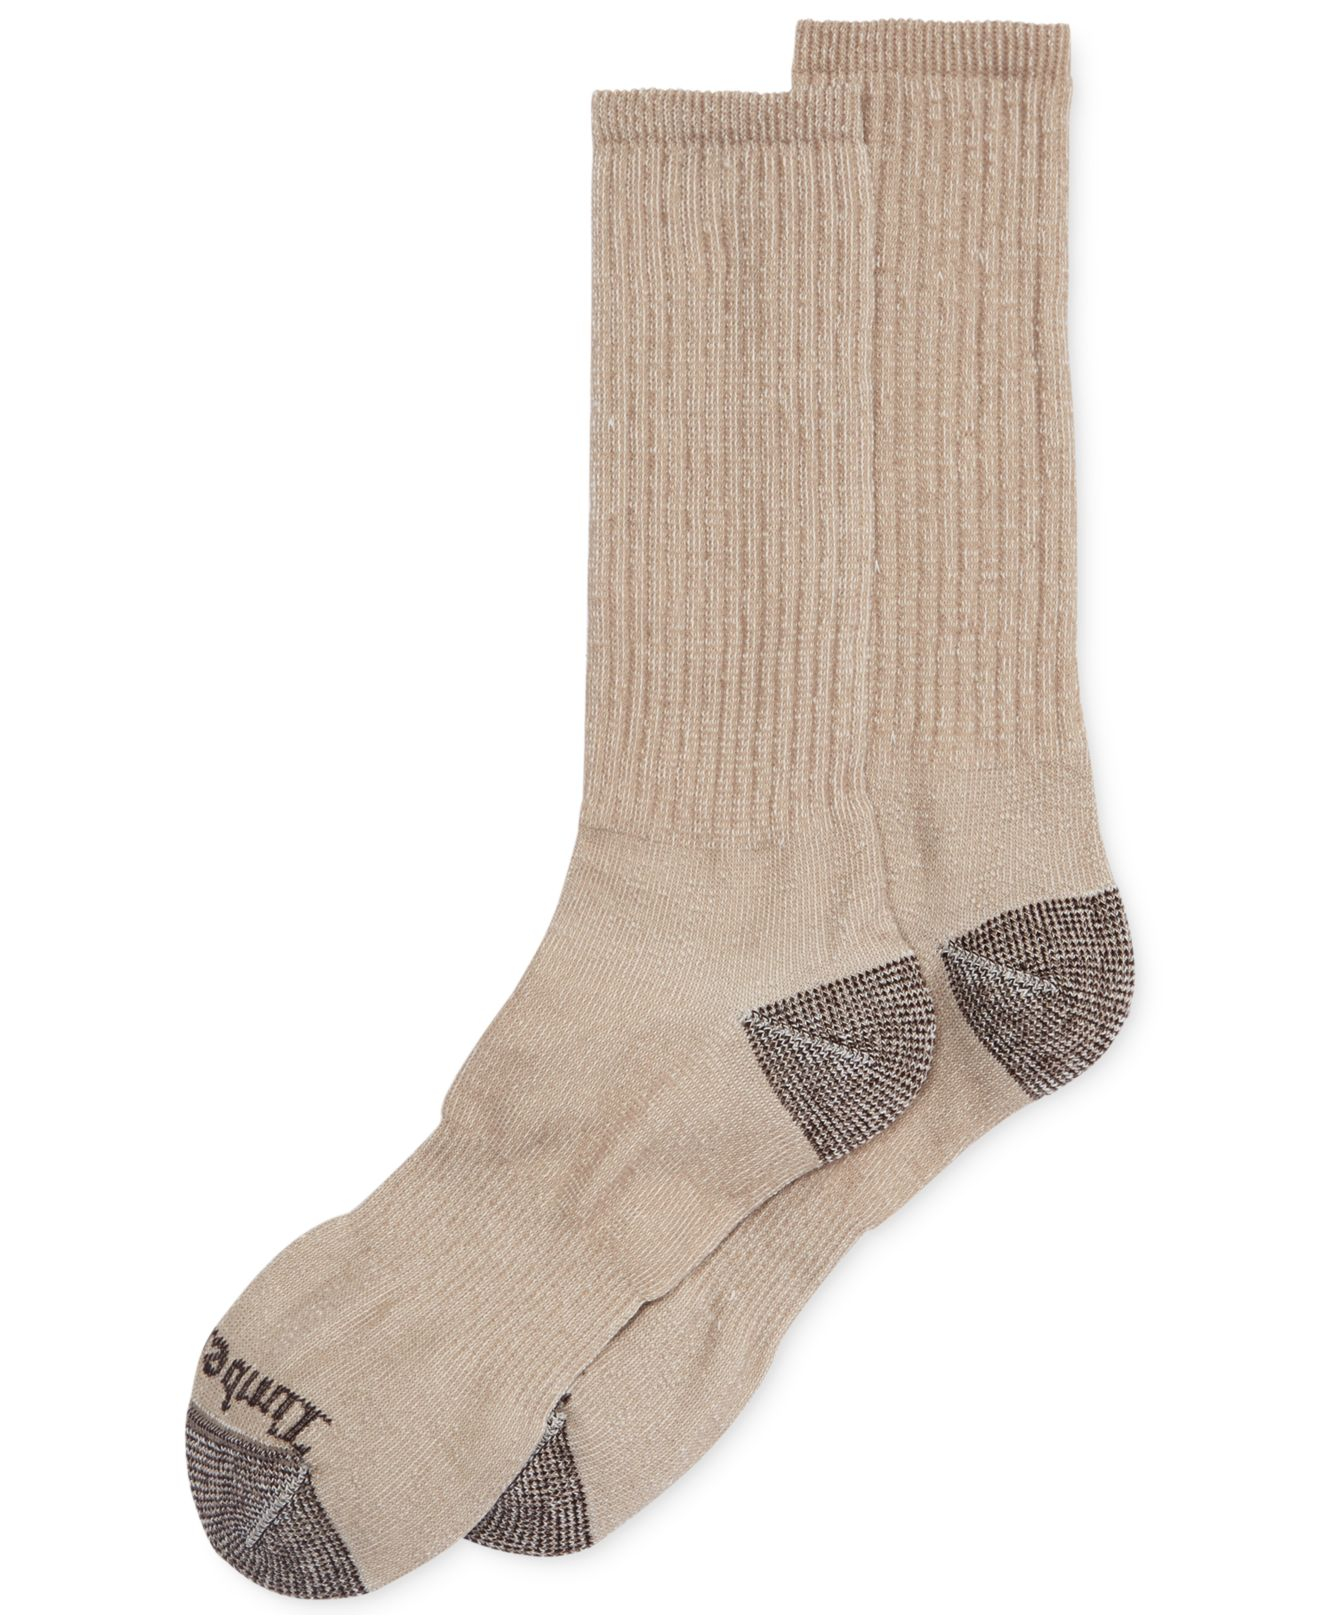 timberland mens socks,yasserchemicals.com